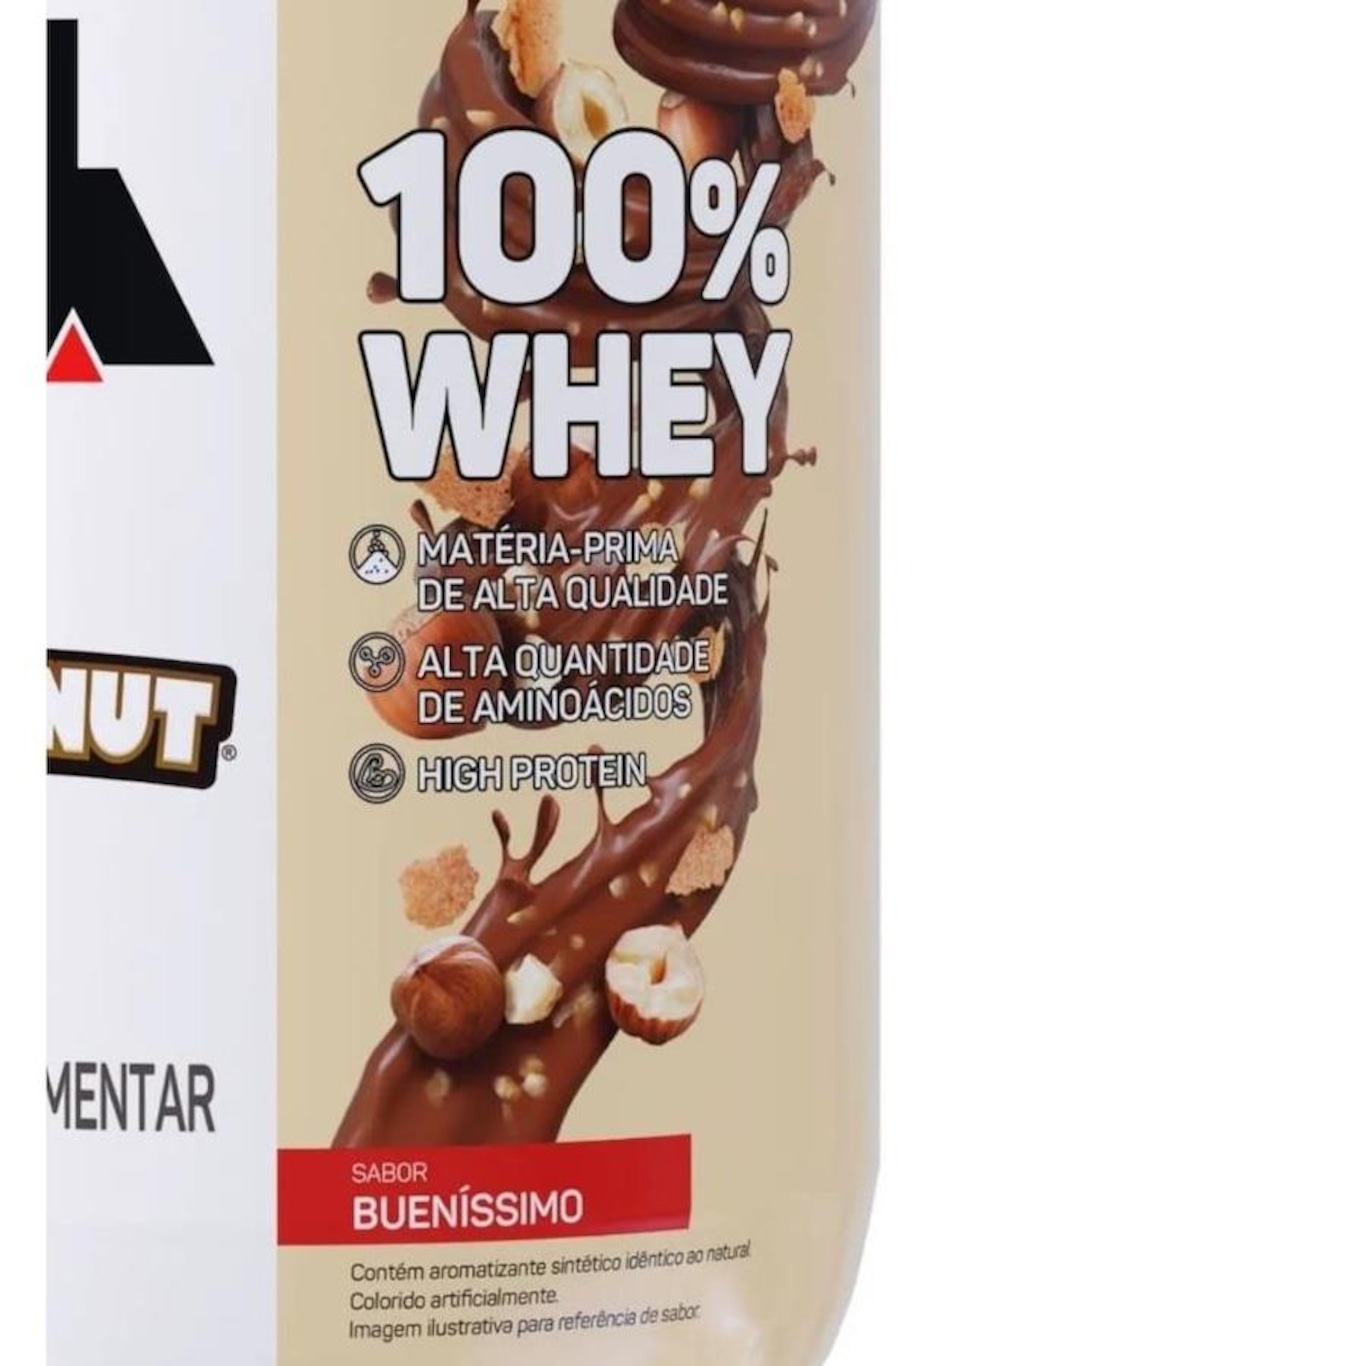 Whey Protein Max Titanium 100% - Dr. Peanut Bueníssimo - 900g